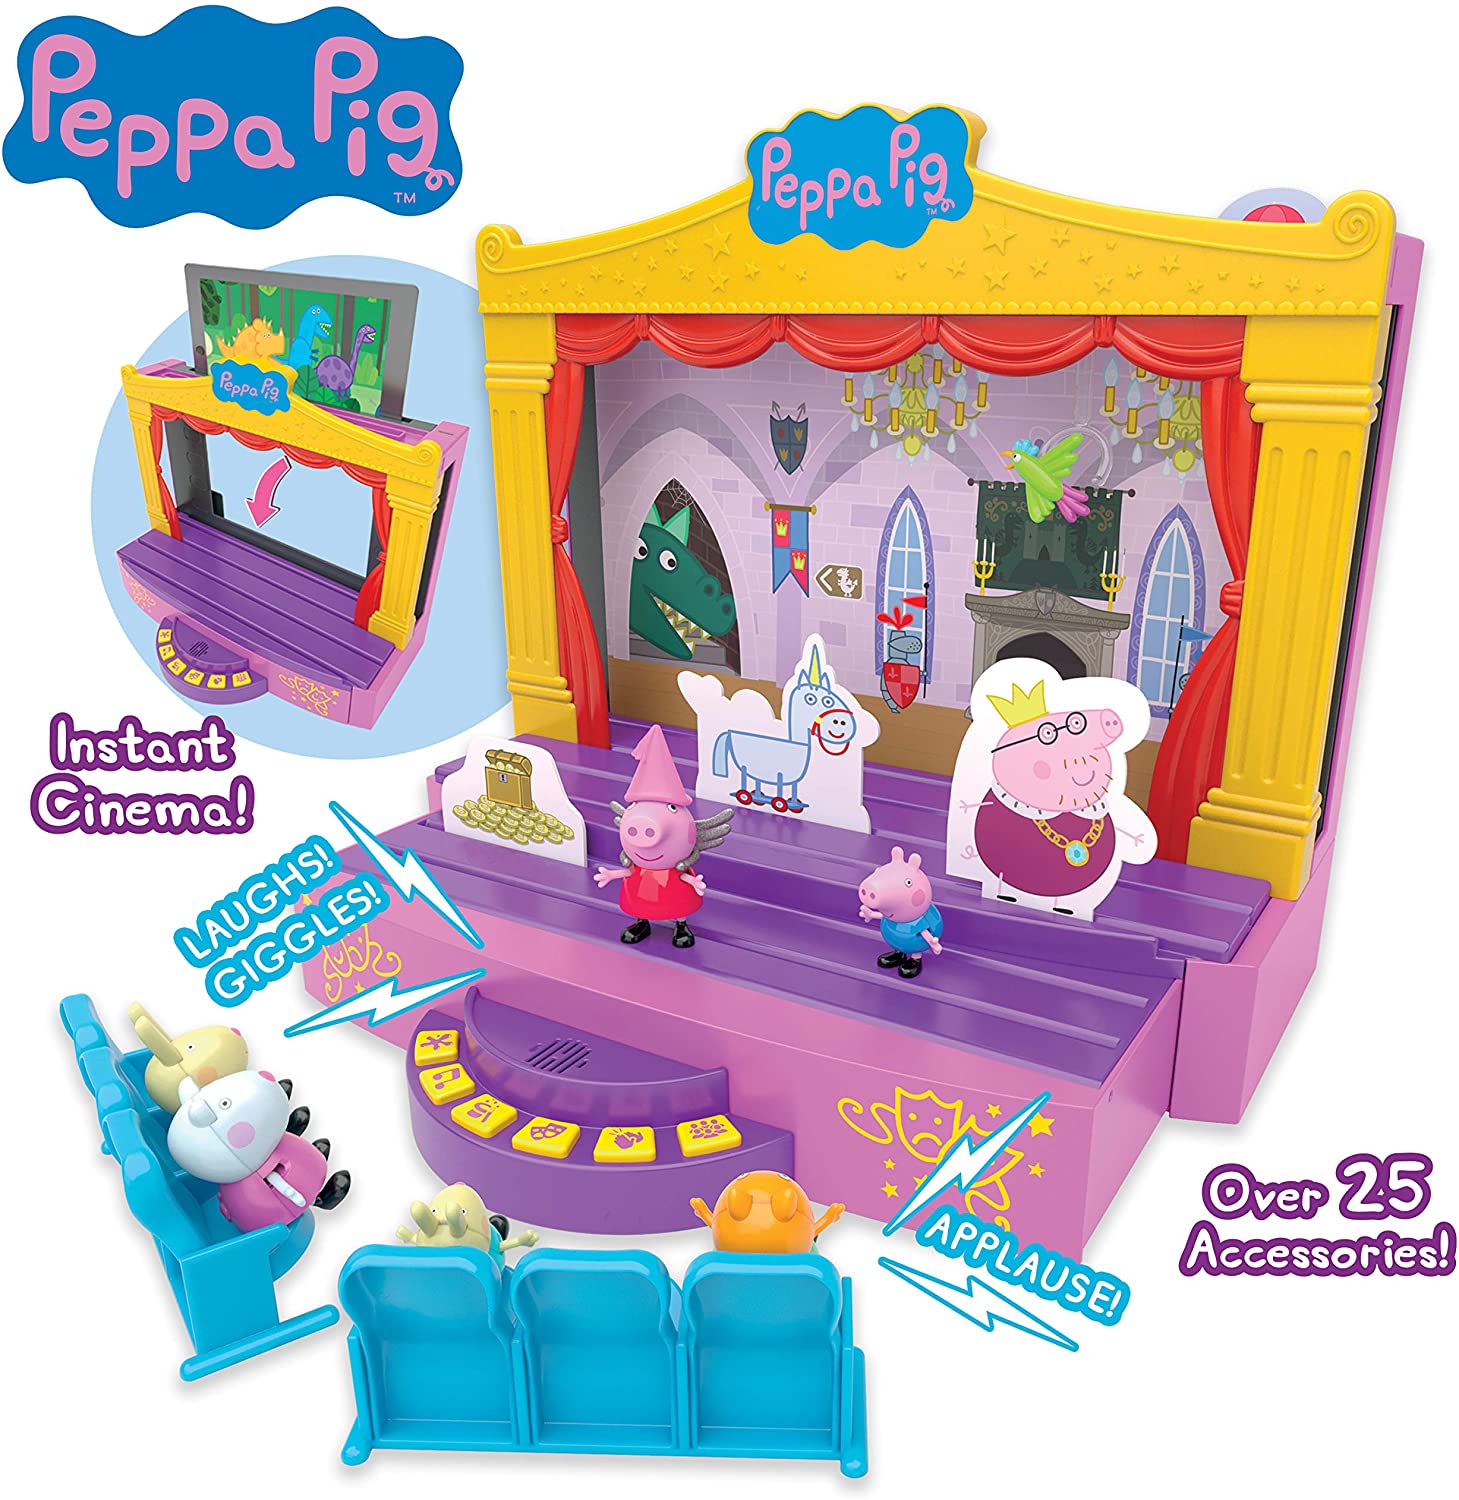 Peppa Pig - Peppas Stage Playset